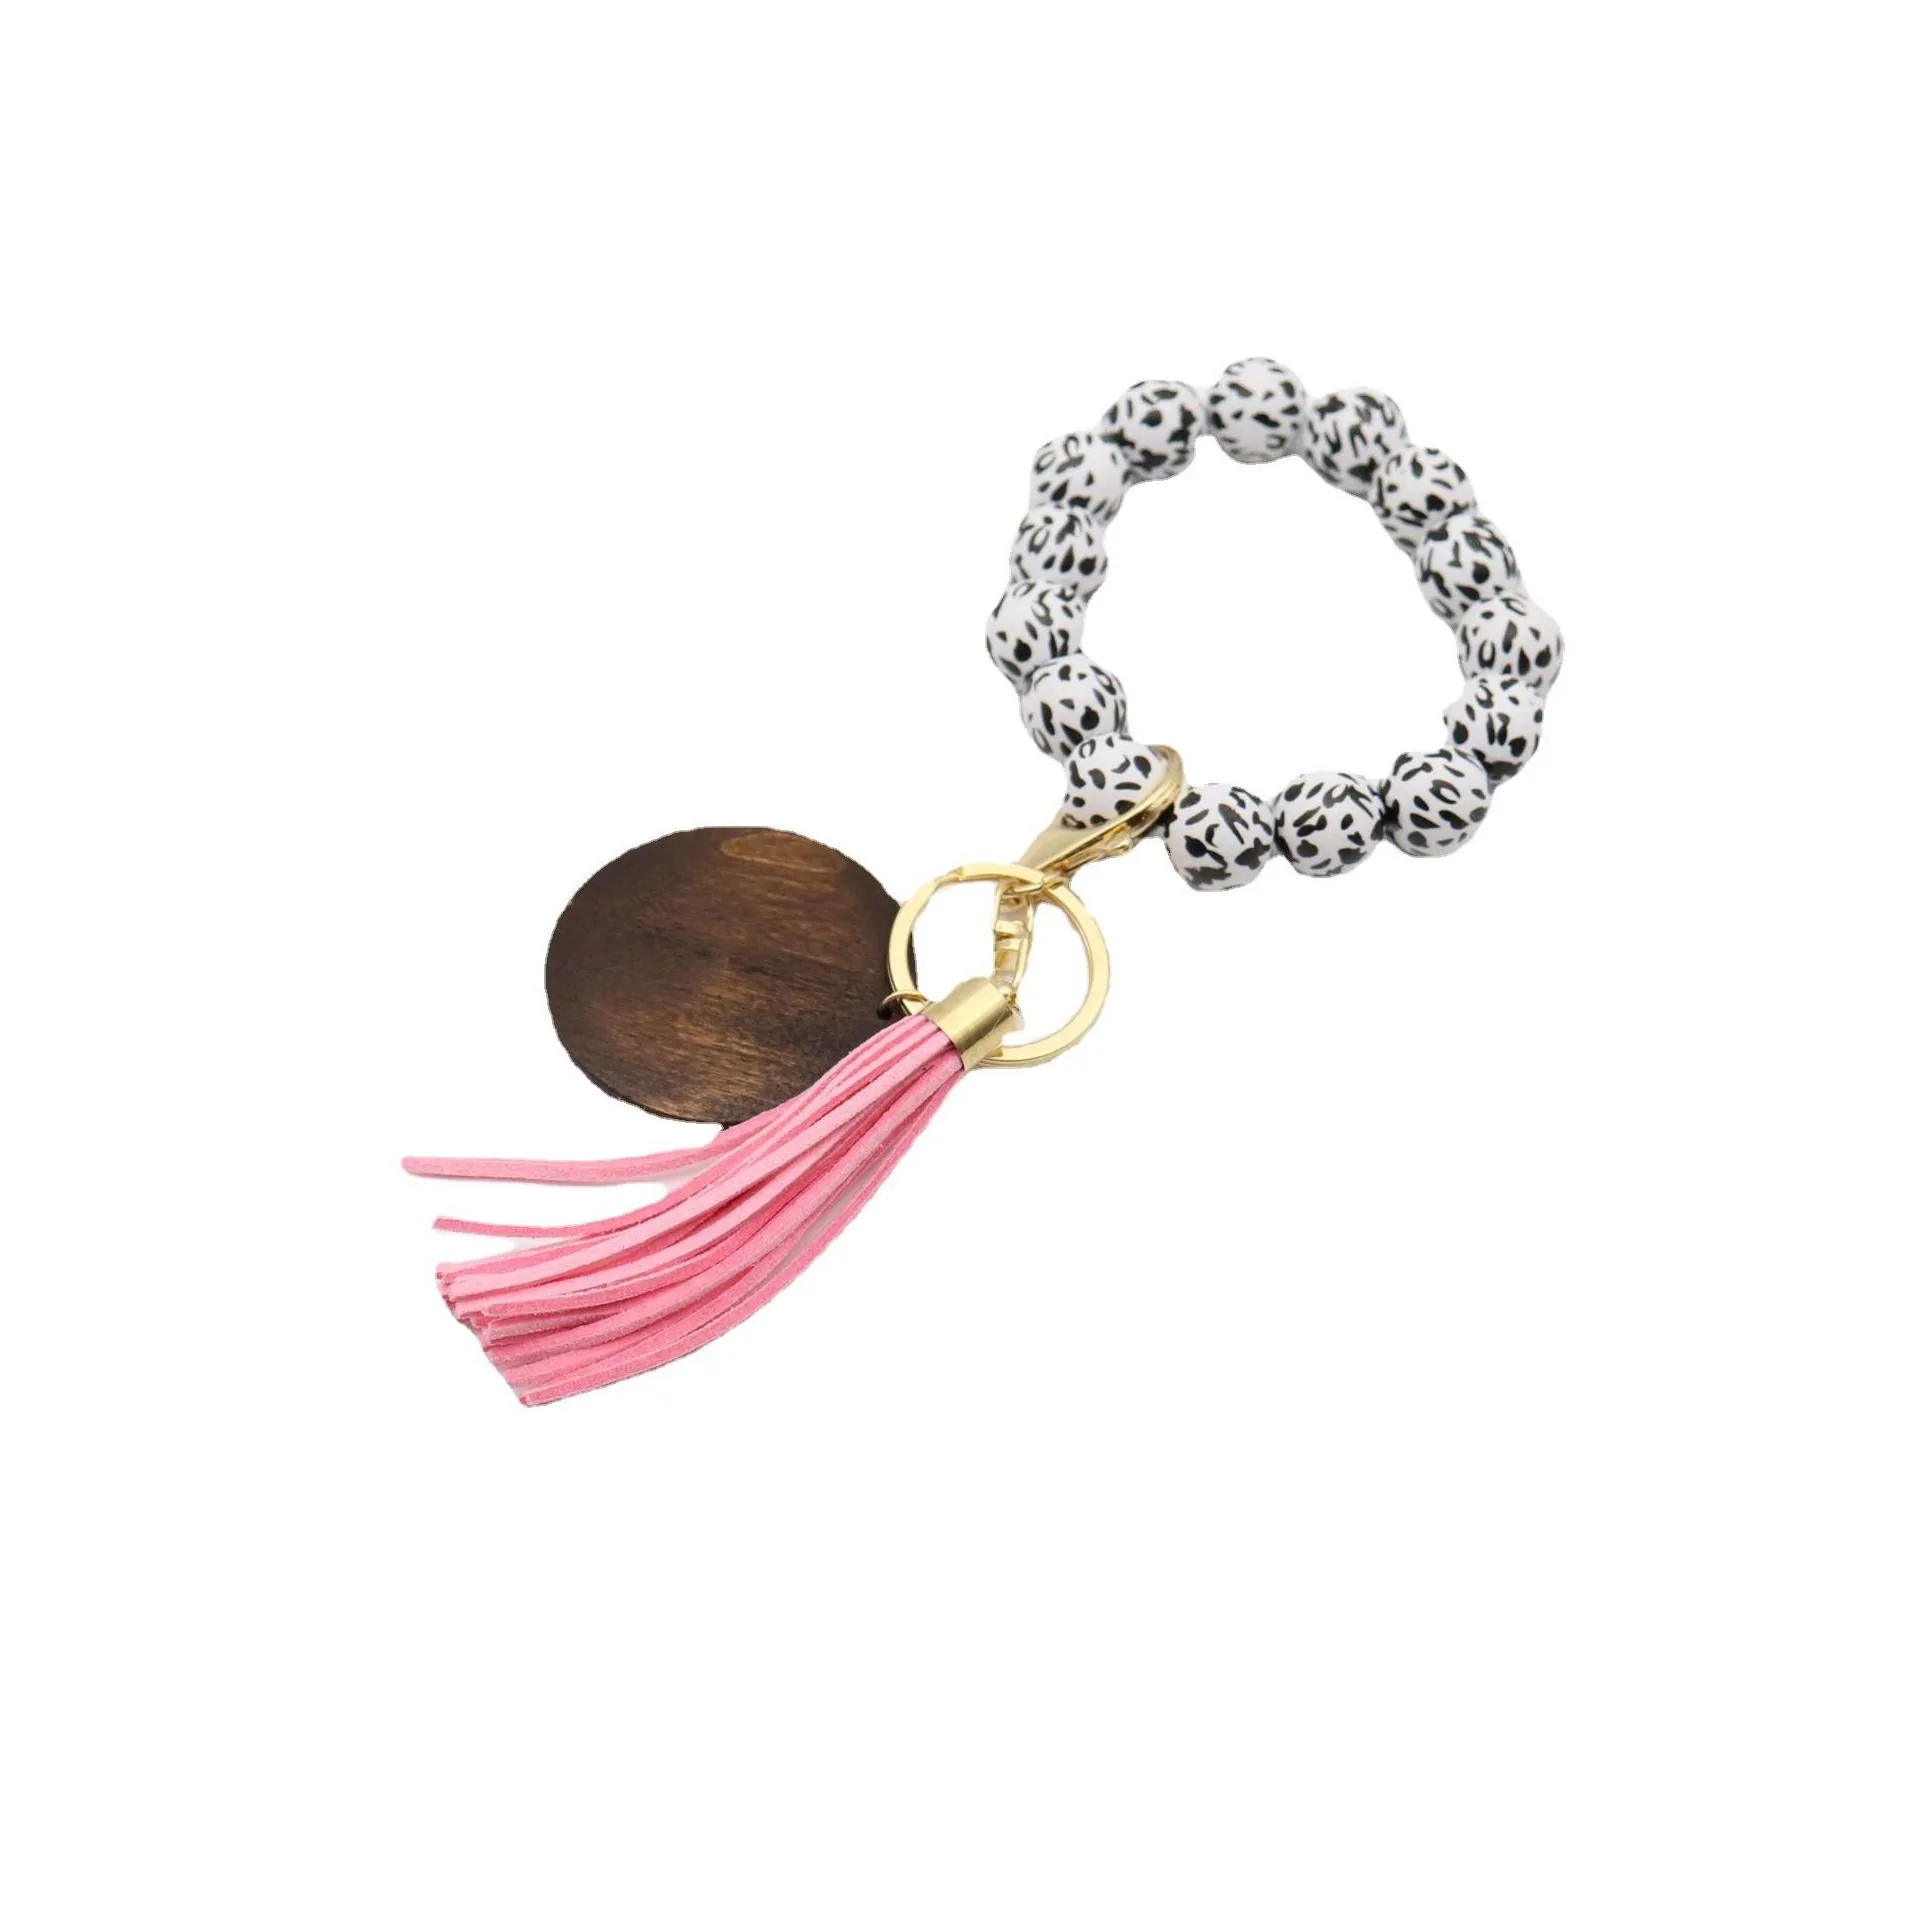 5 styles leopard wooden bracelet keychain with tassels diy woodwooden fiber pandent wood bead bangle key decorate fashion